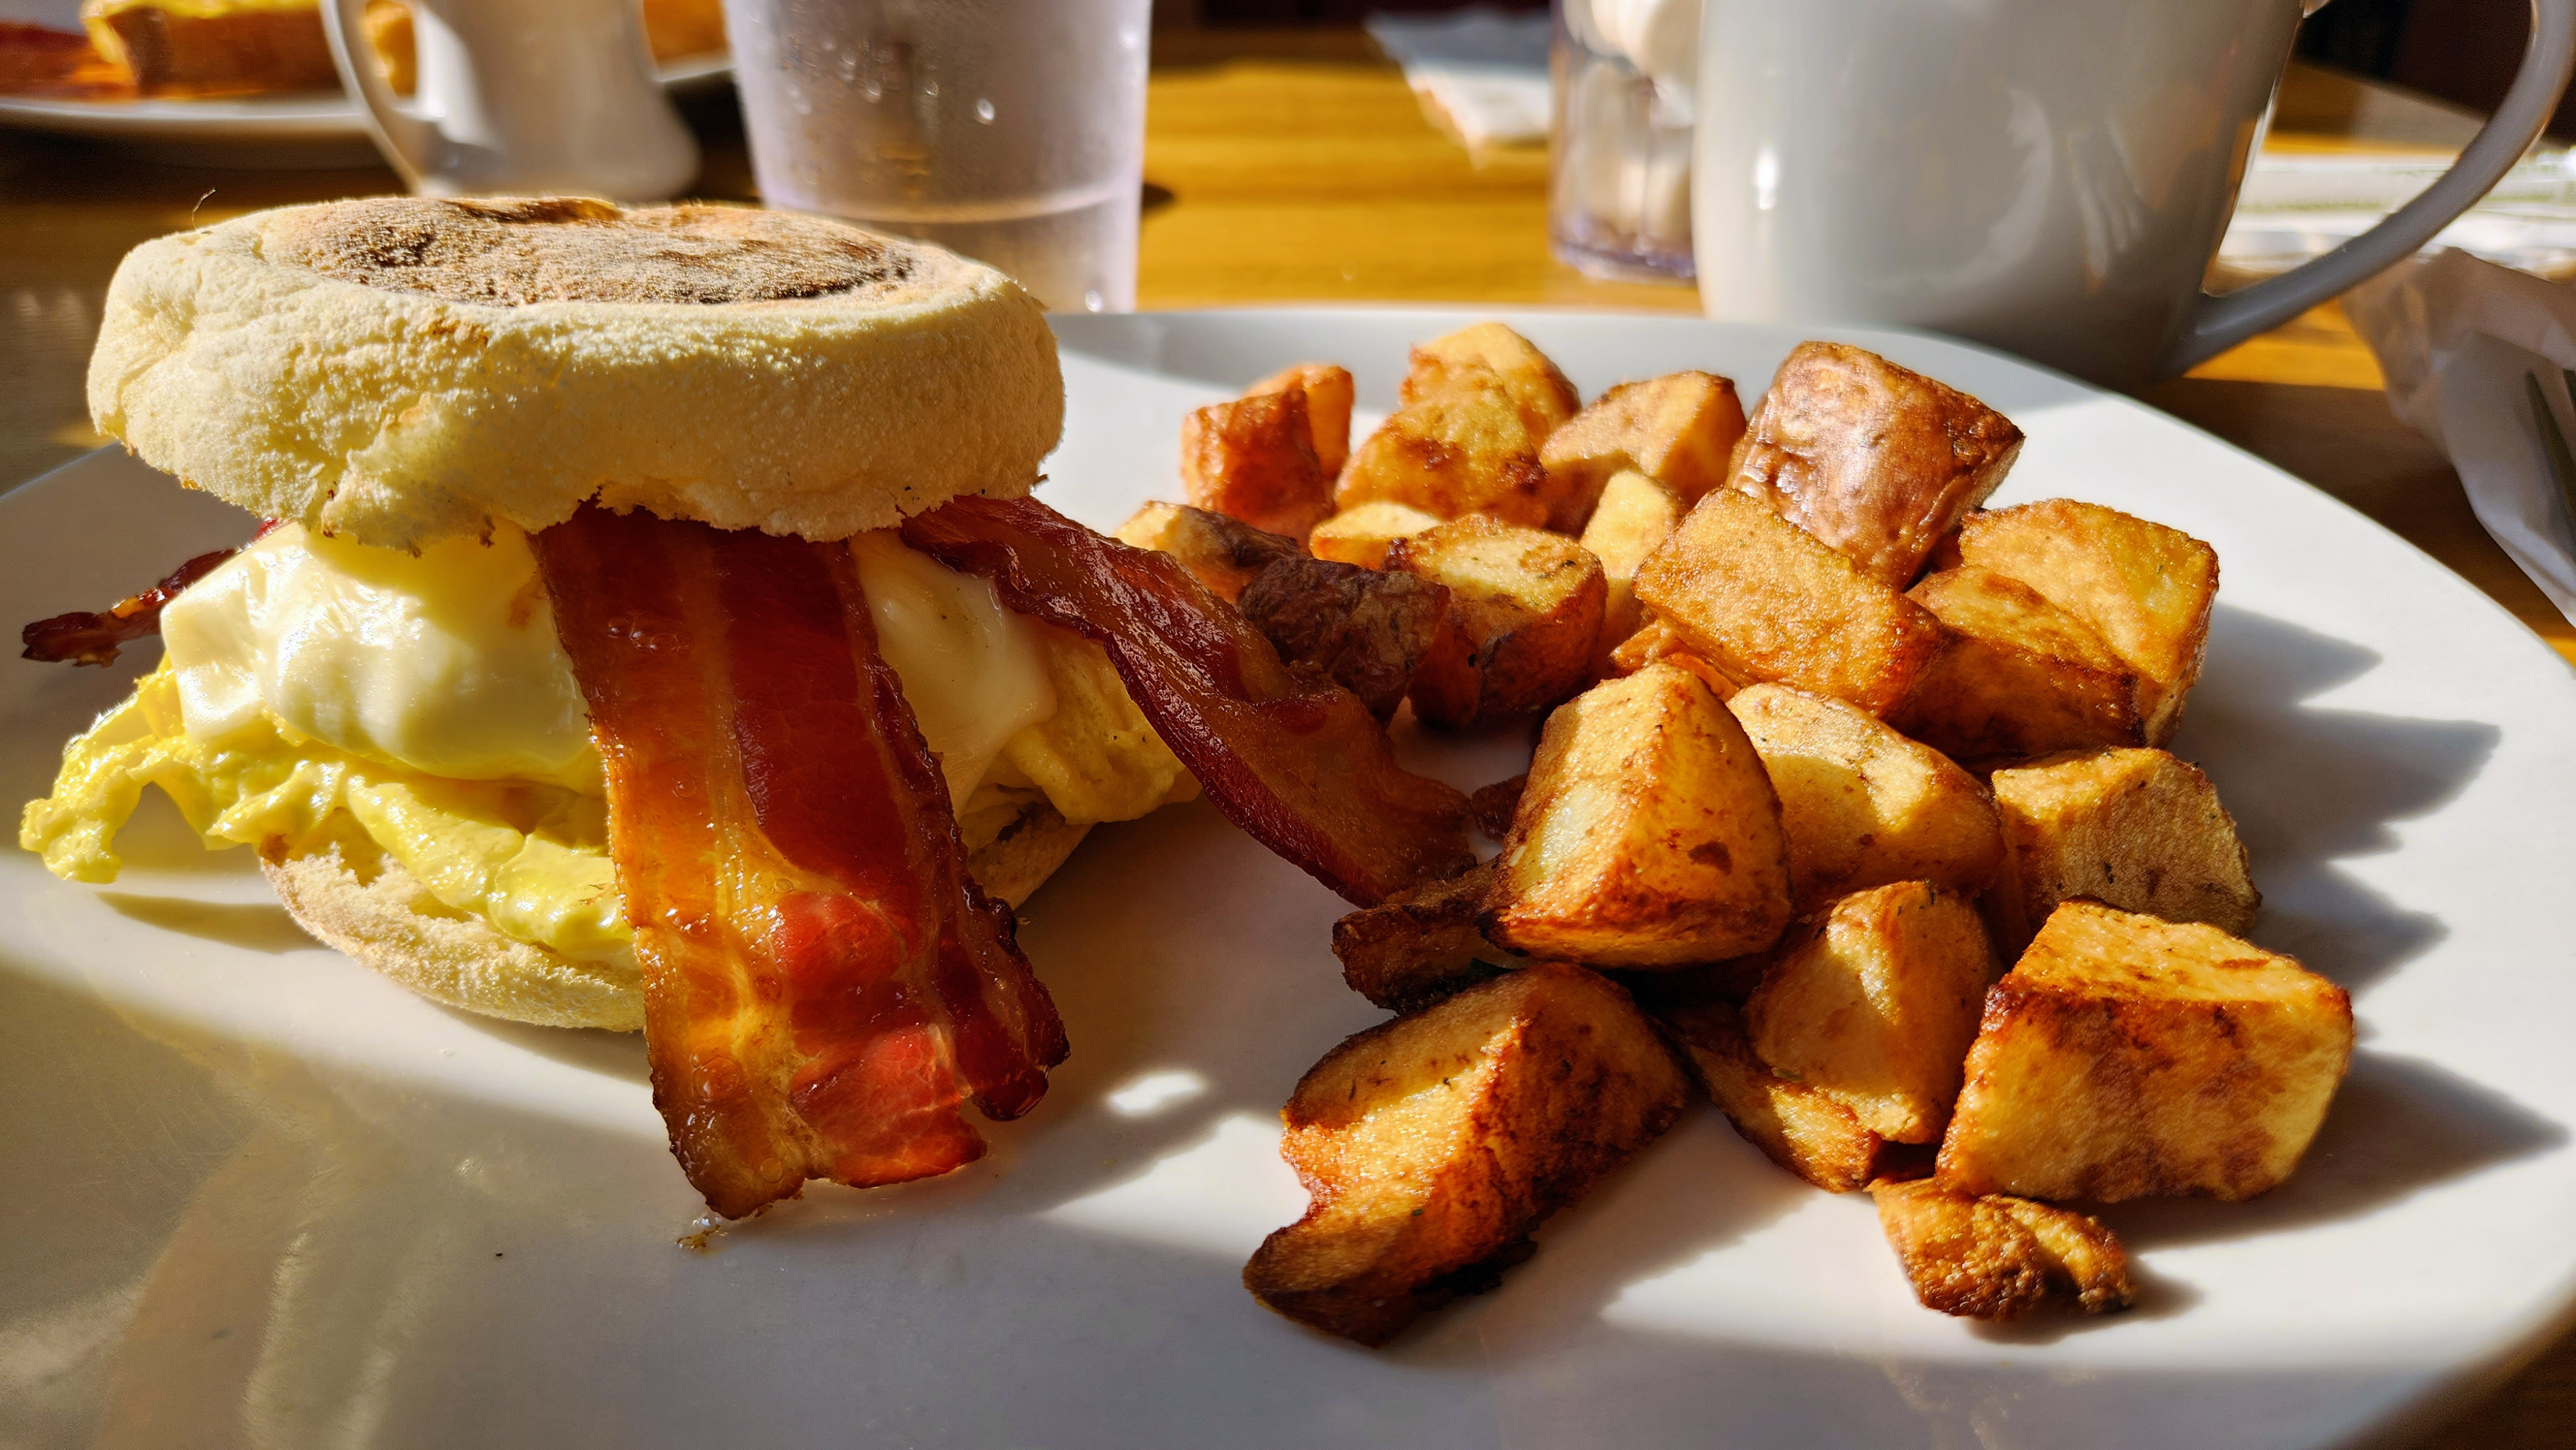 A breakfast sandwich and fried potatoes